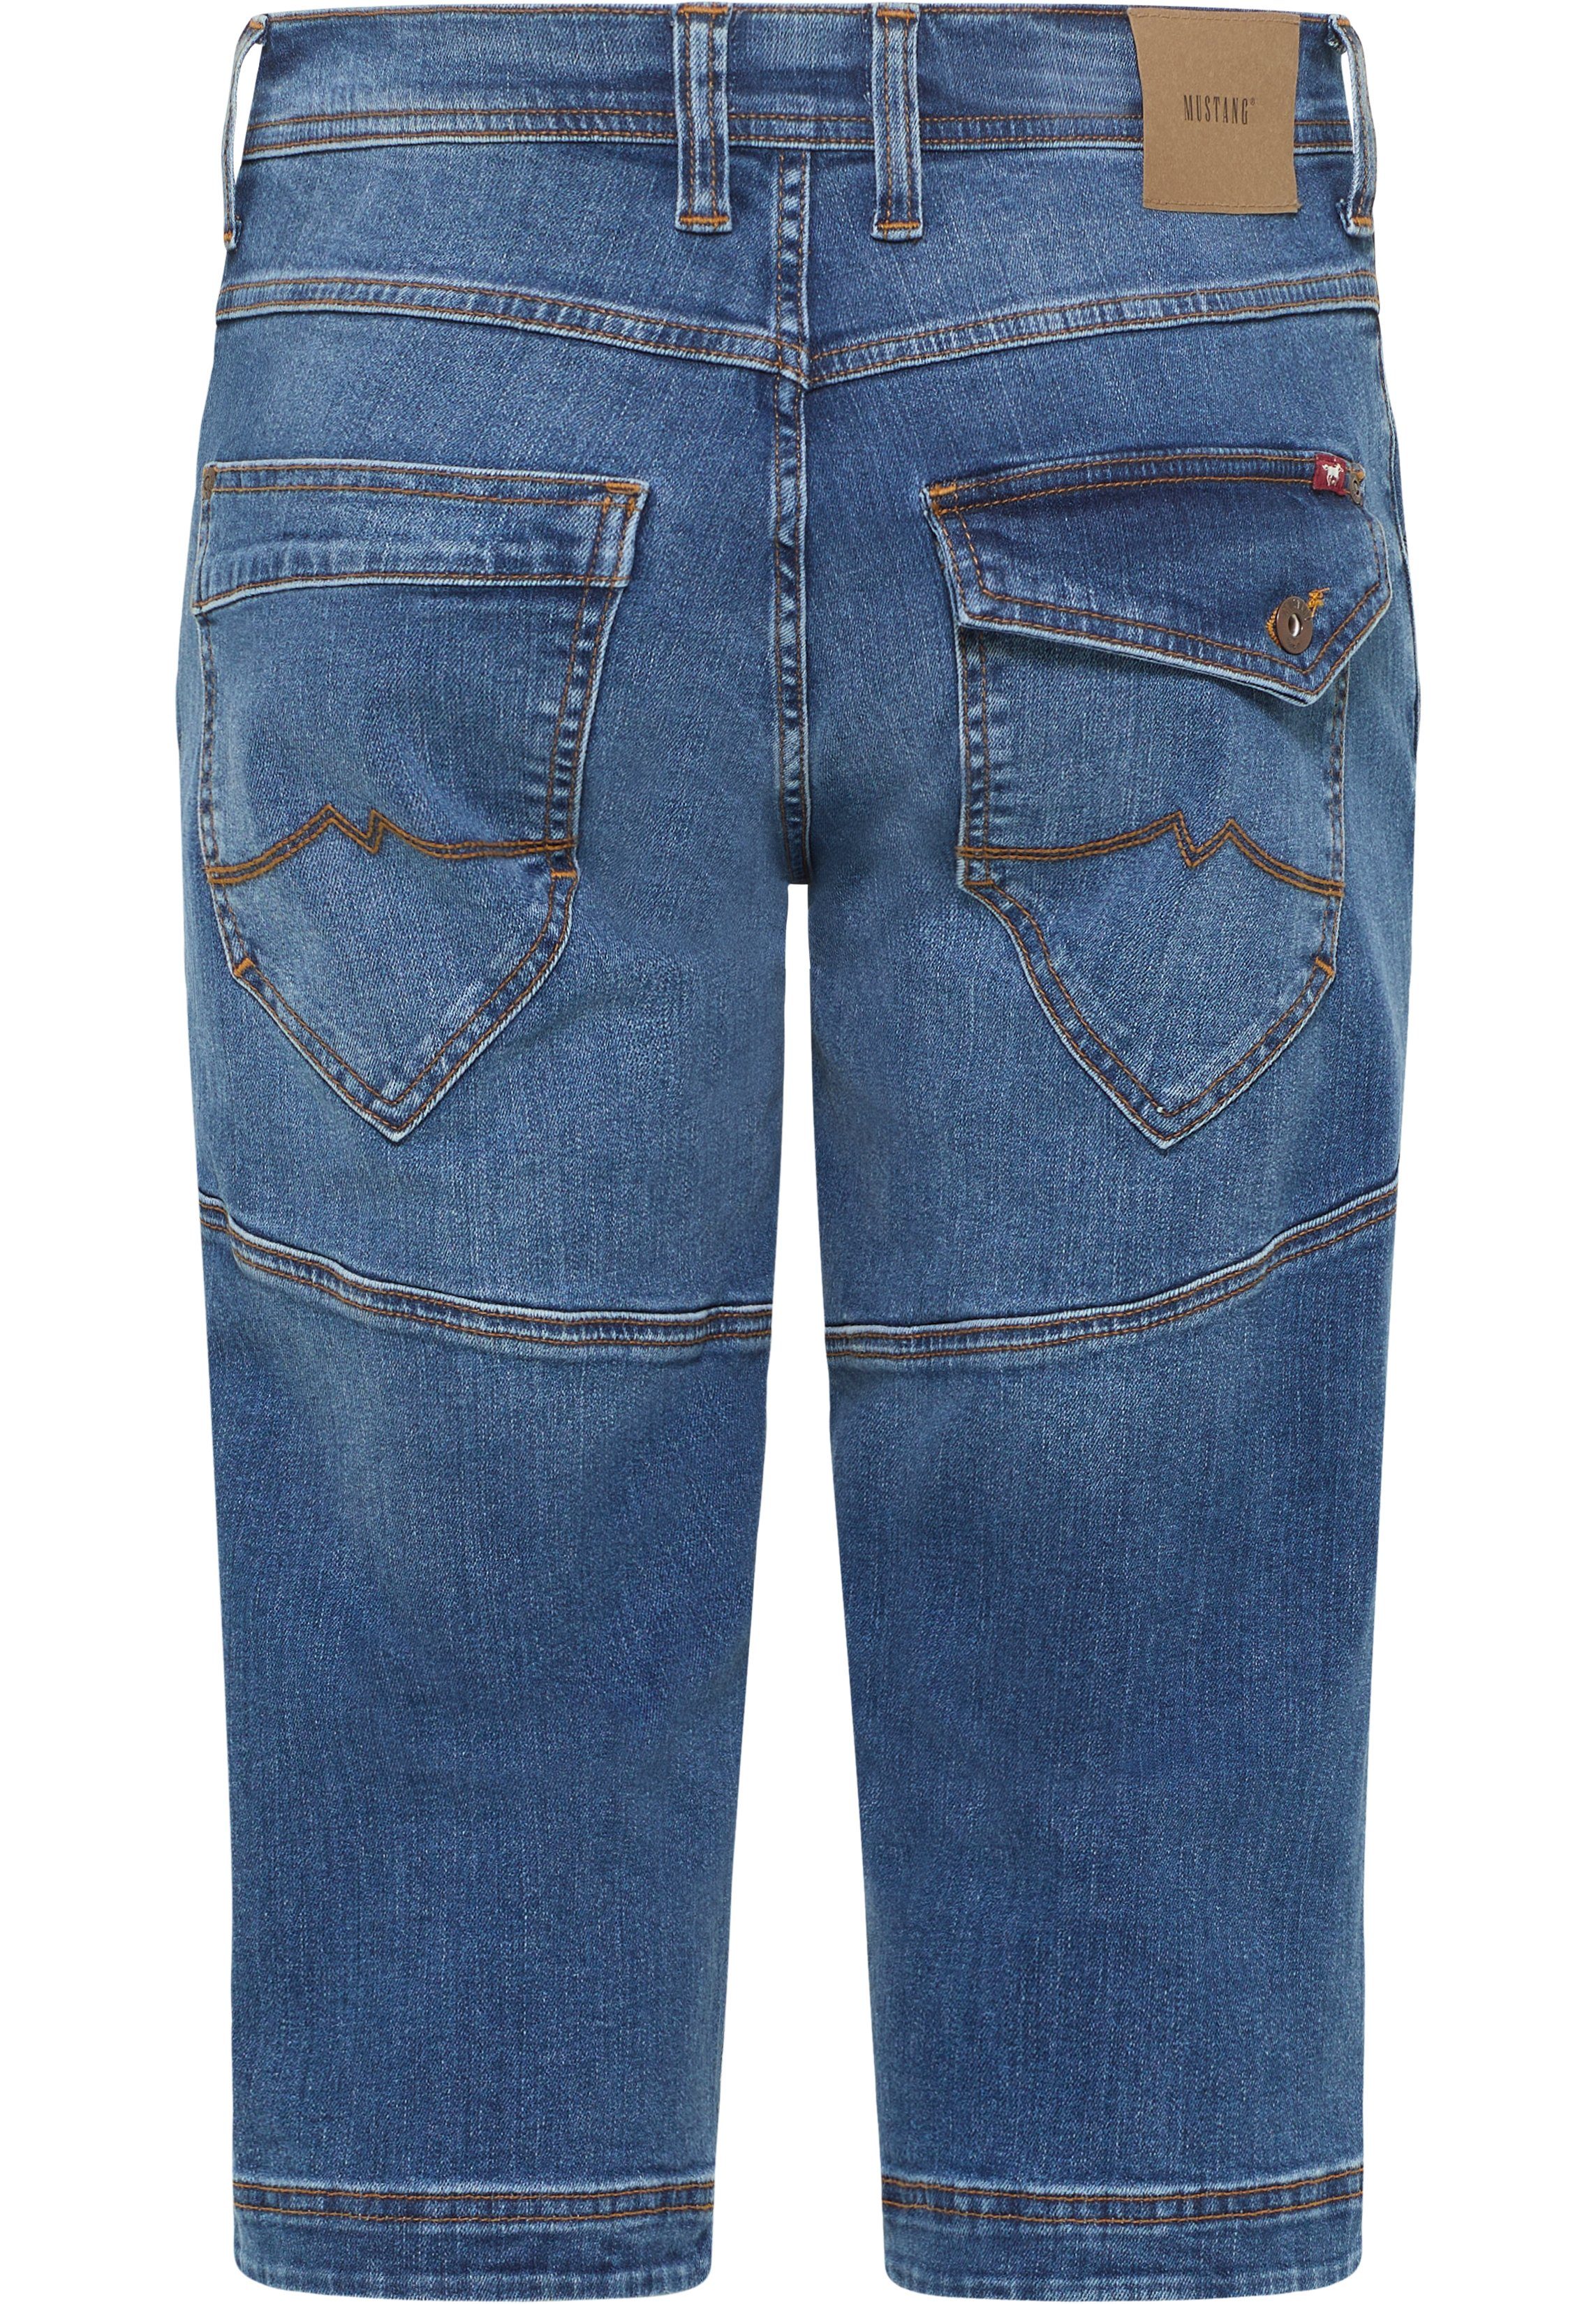 Style Jeansshorts MUSTANG Shorts Fremont blau-5000783